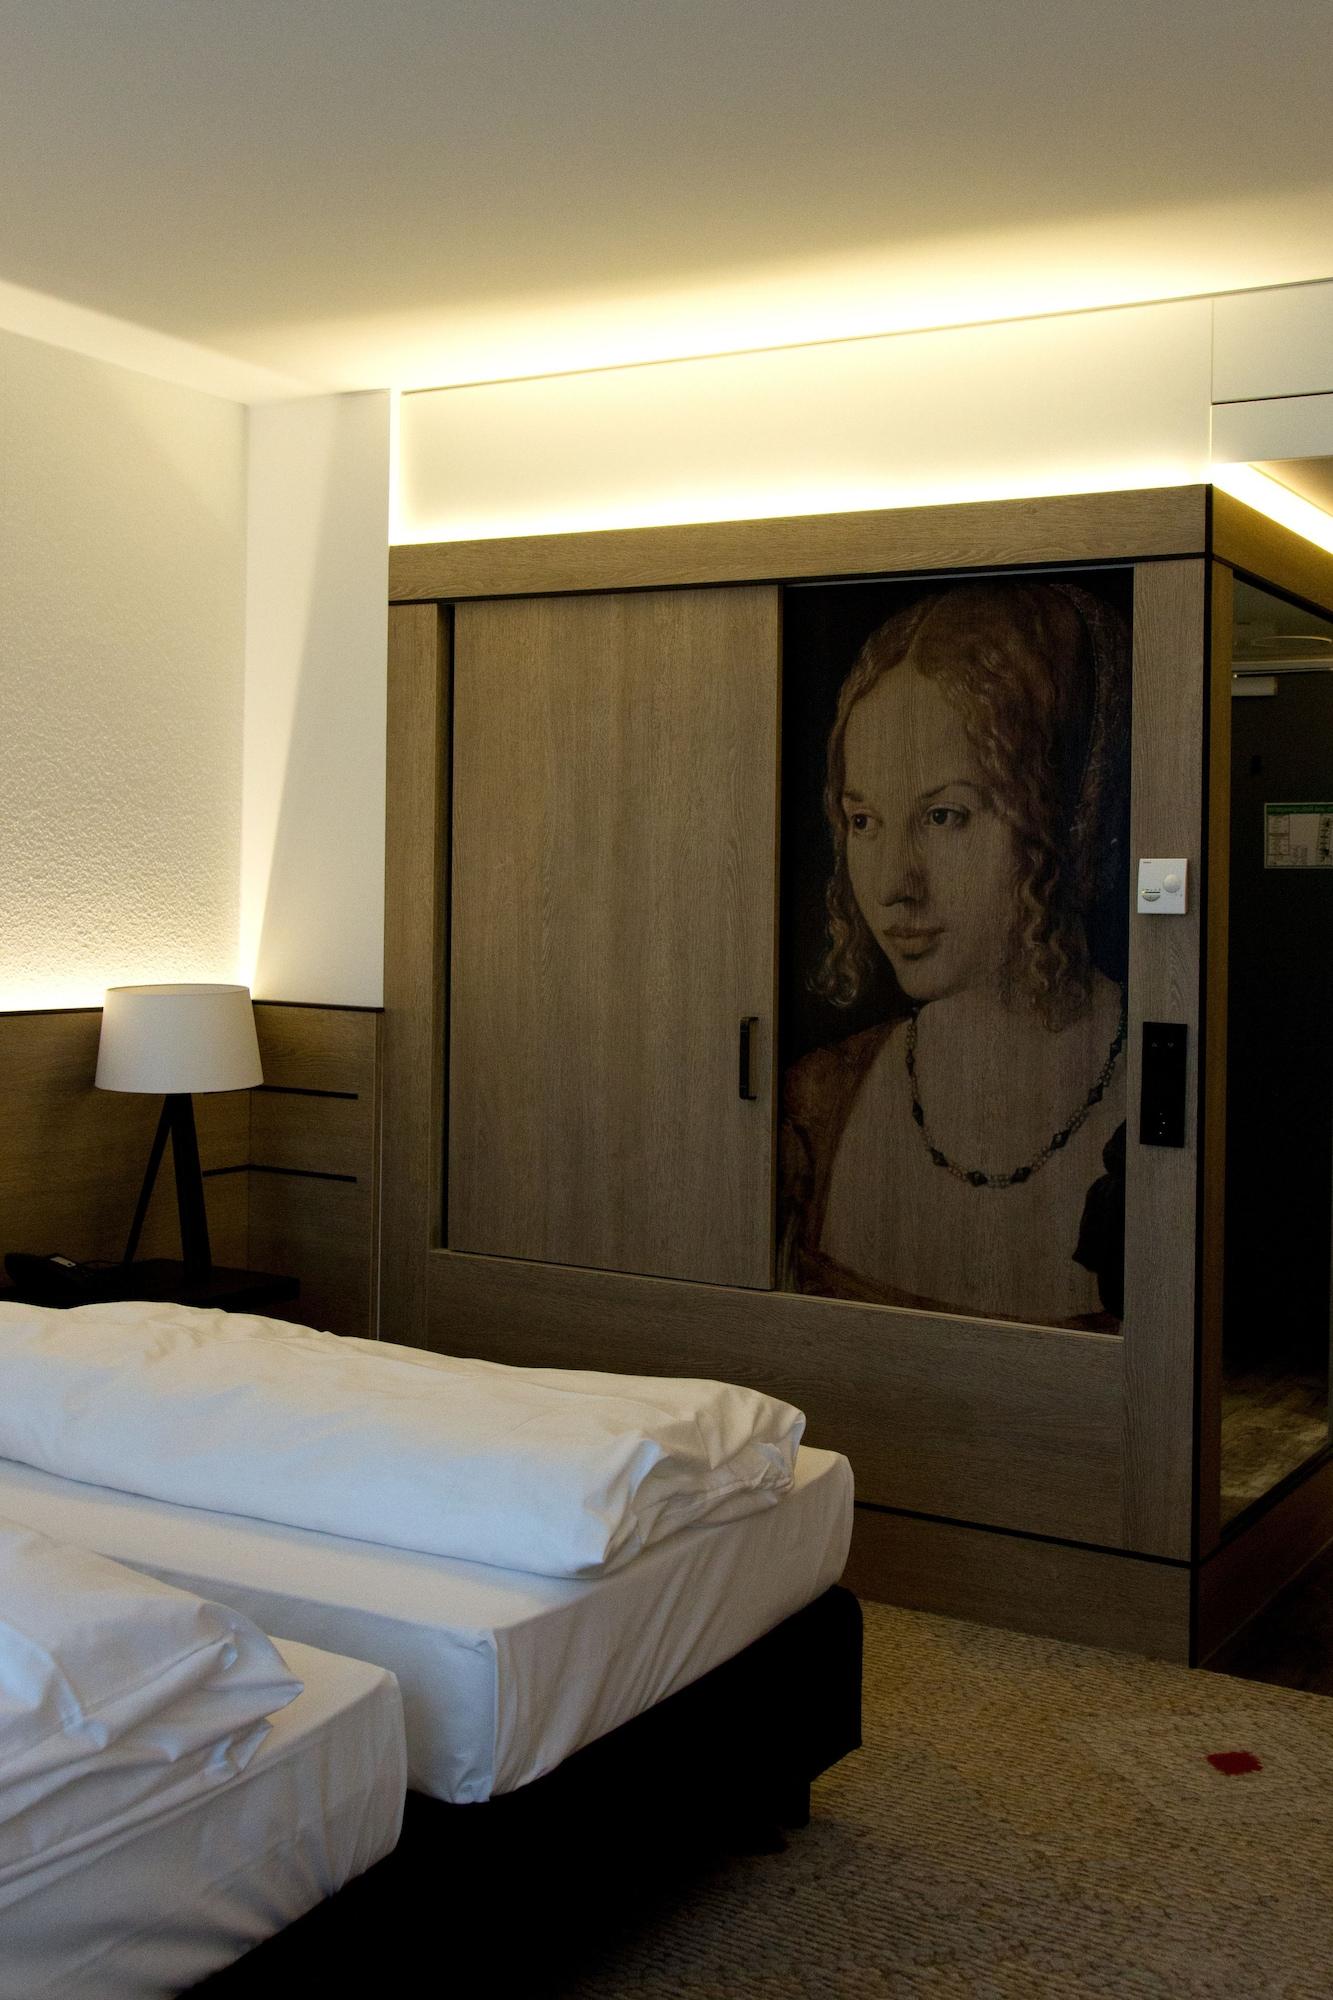 Sorat Hotel Saxx Nurnberg Экстерьер фото